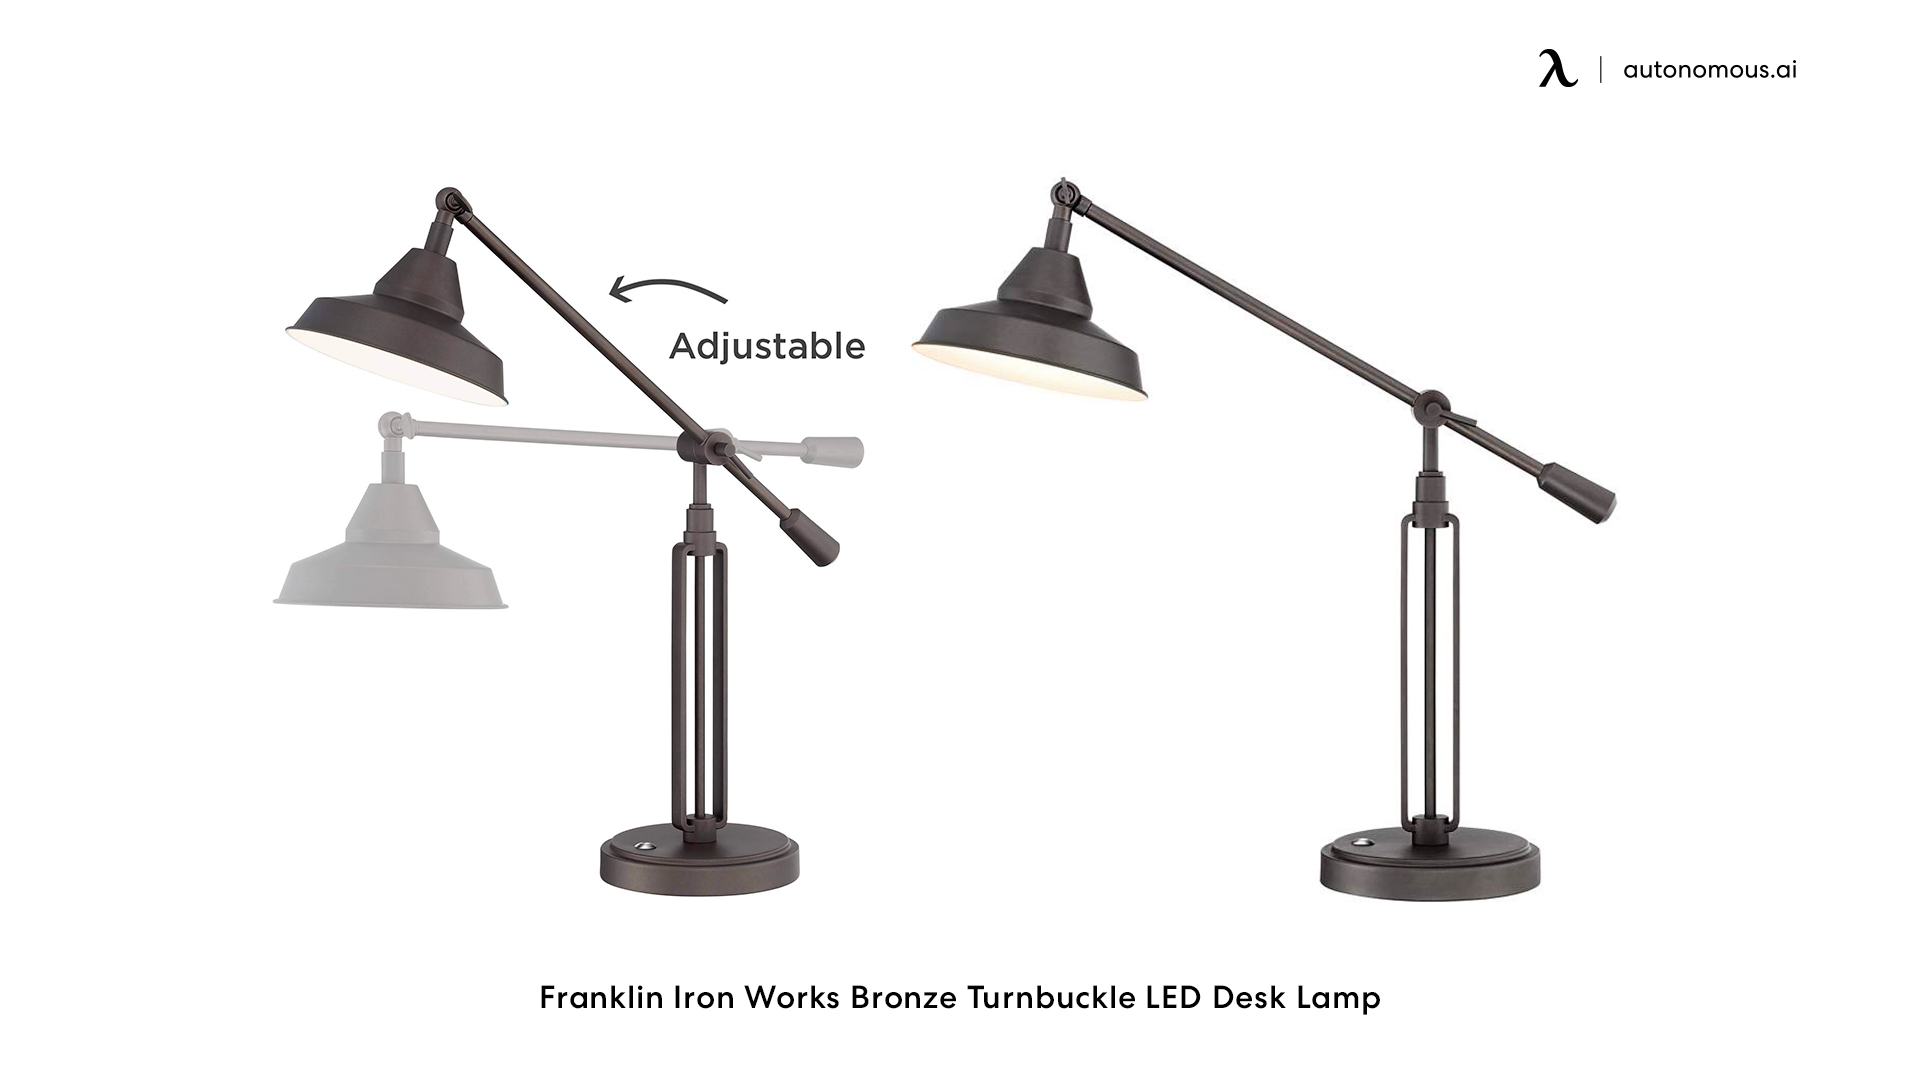 Franklin Iron Works Bronze Turnbuckle light for office desk